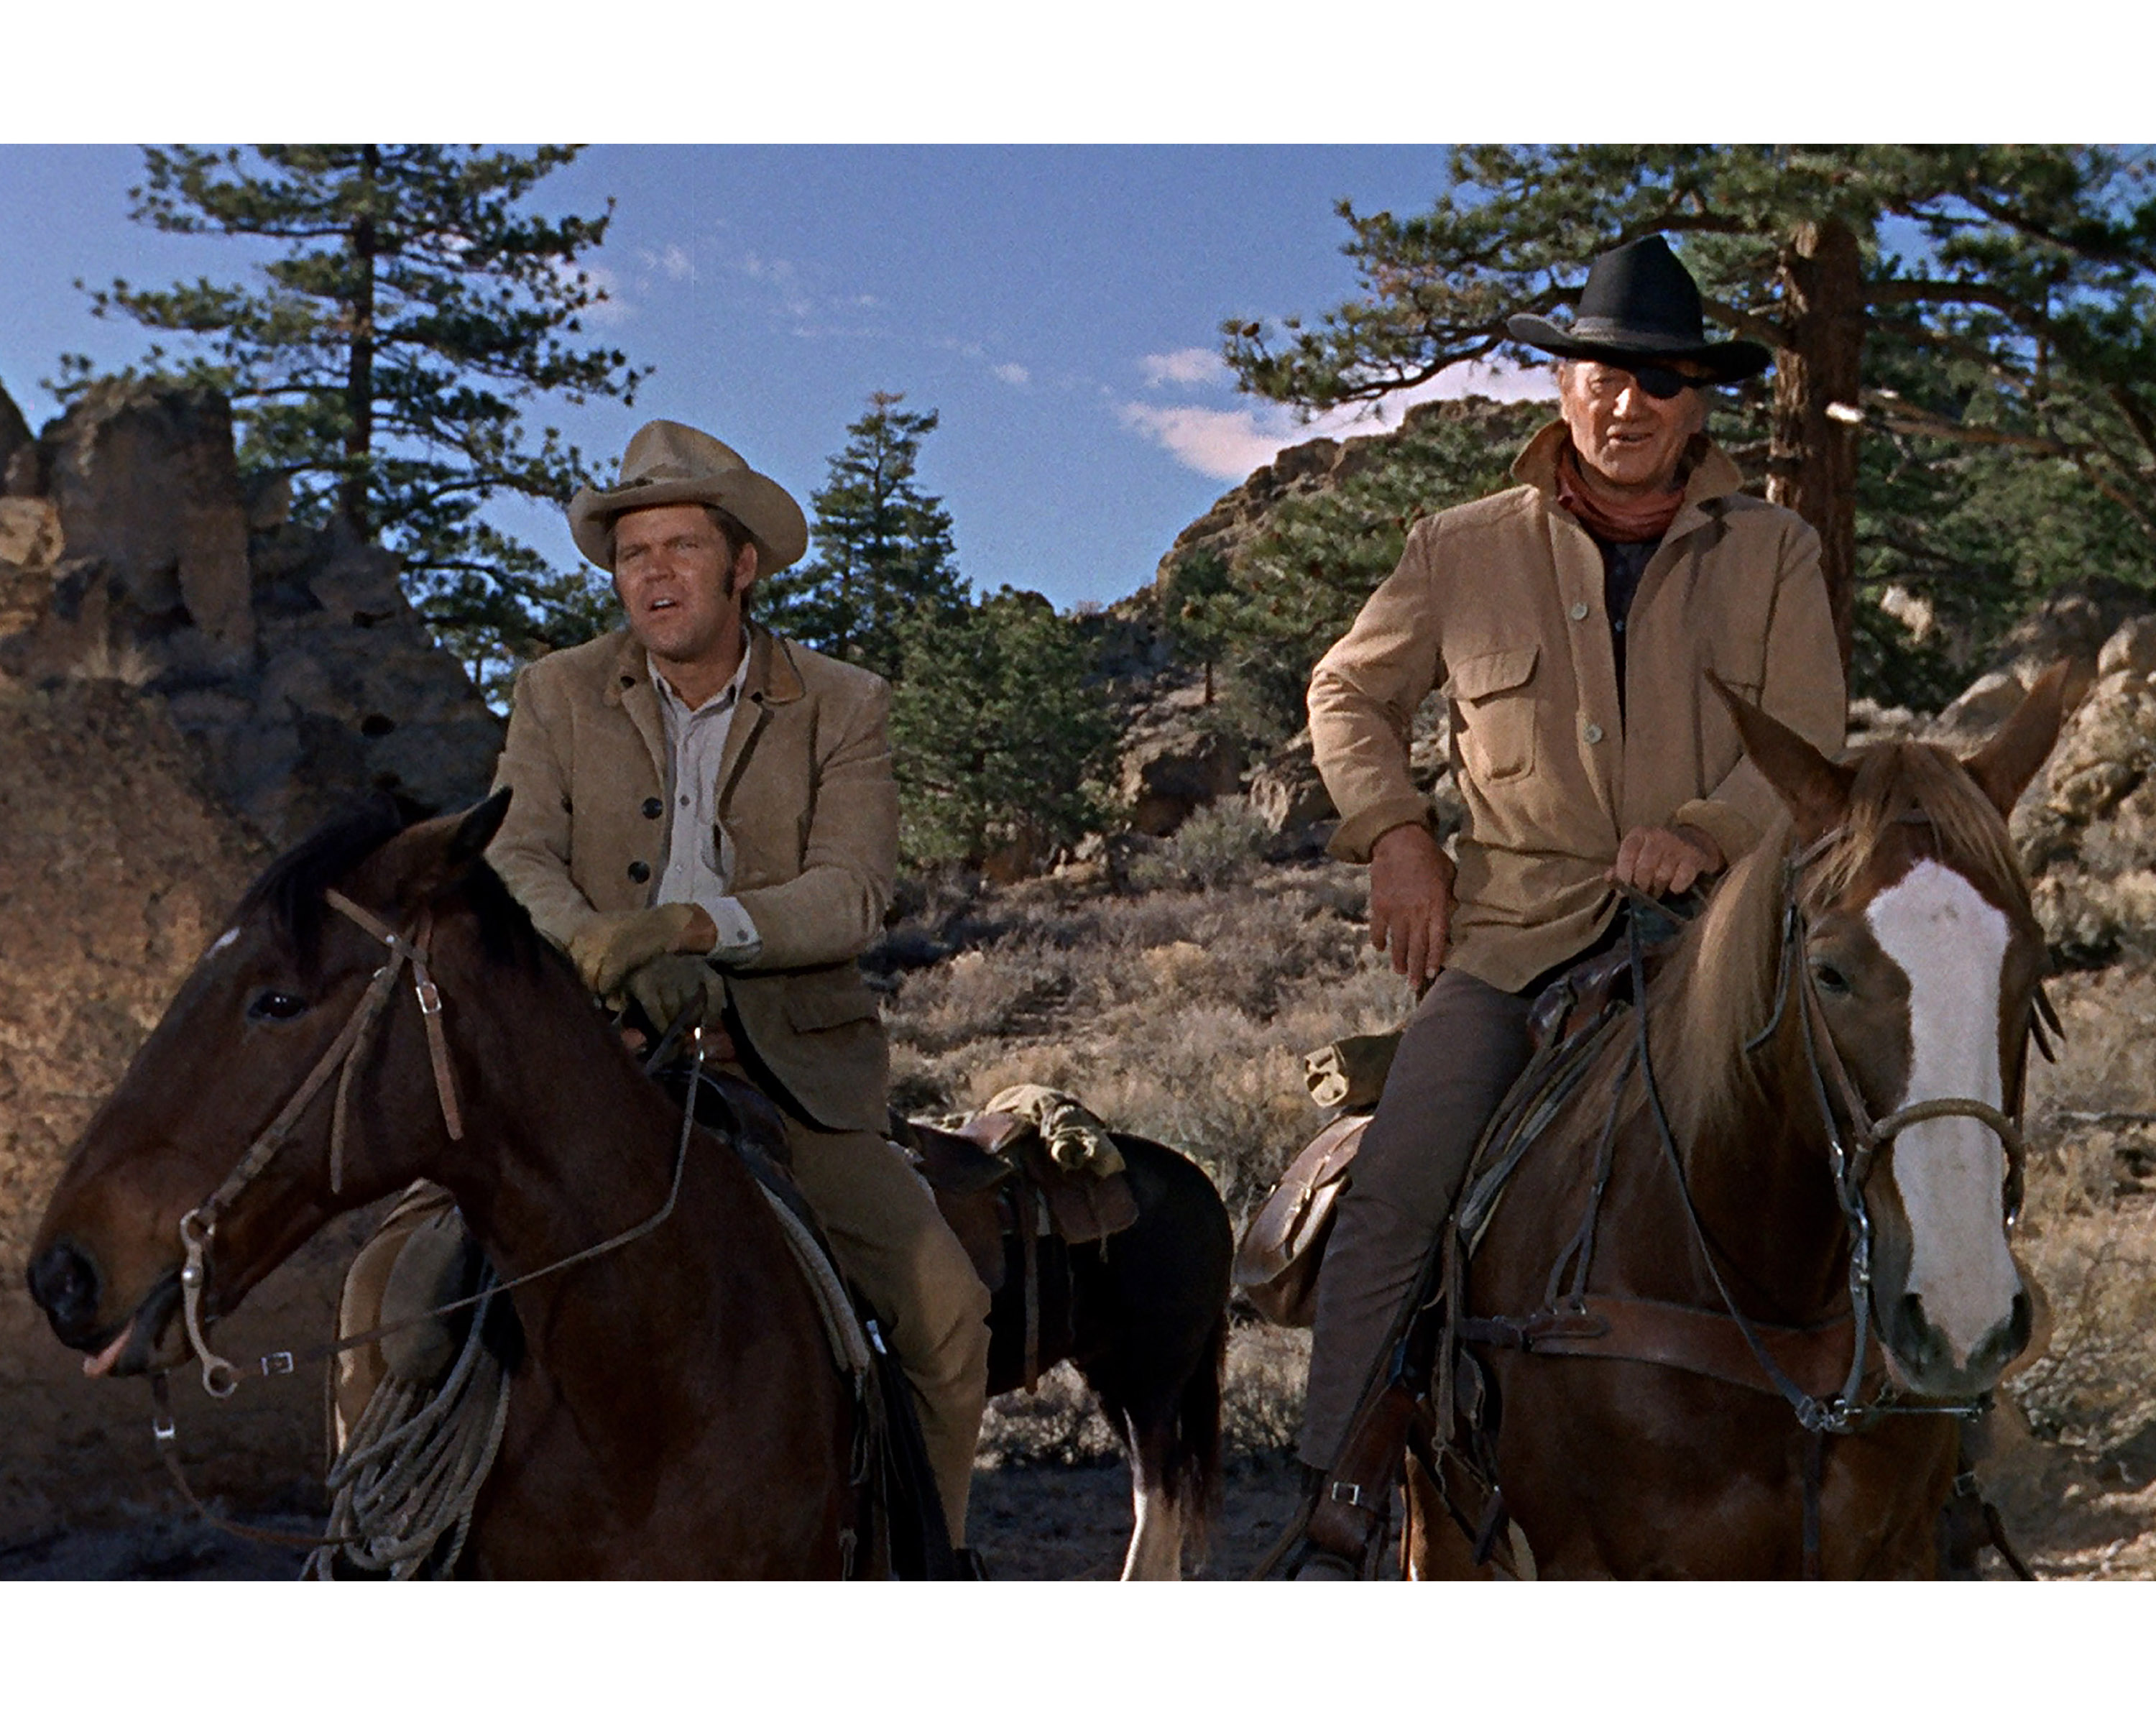 John Wayne and Glen Campbell on horseback